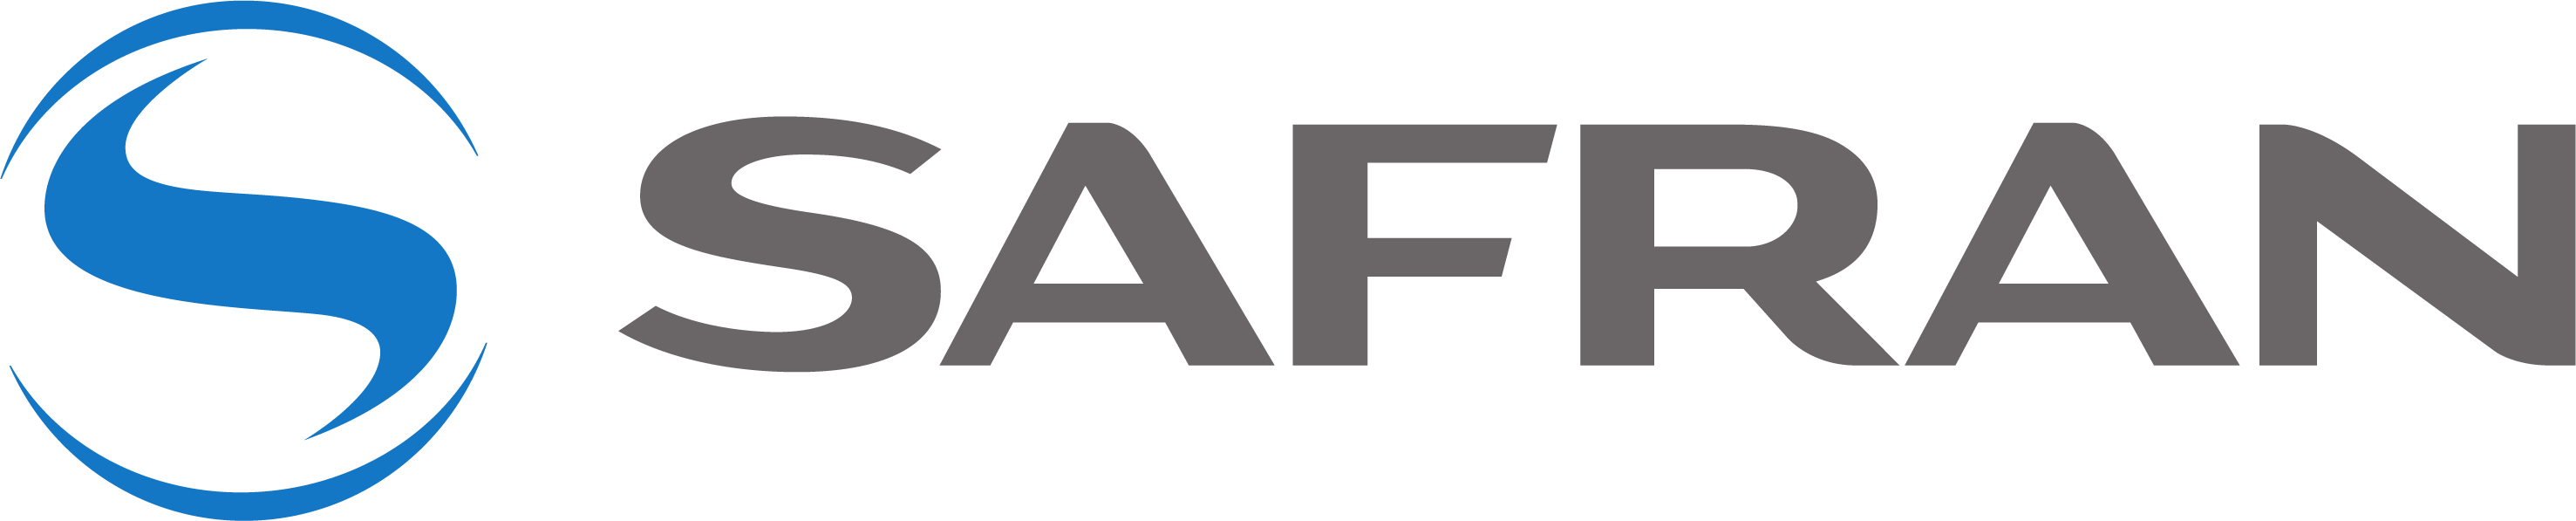 safran-logo-2016